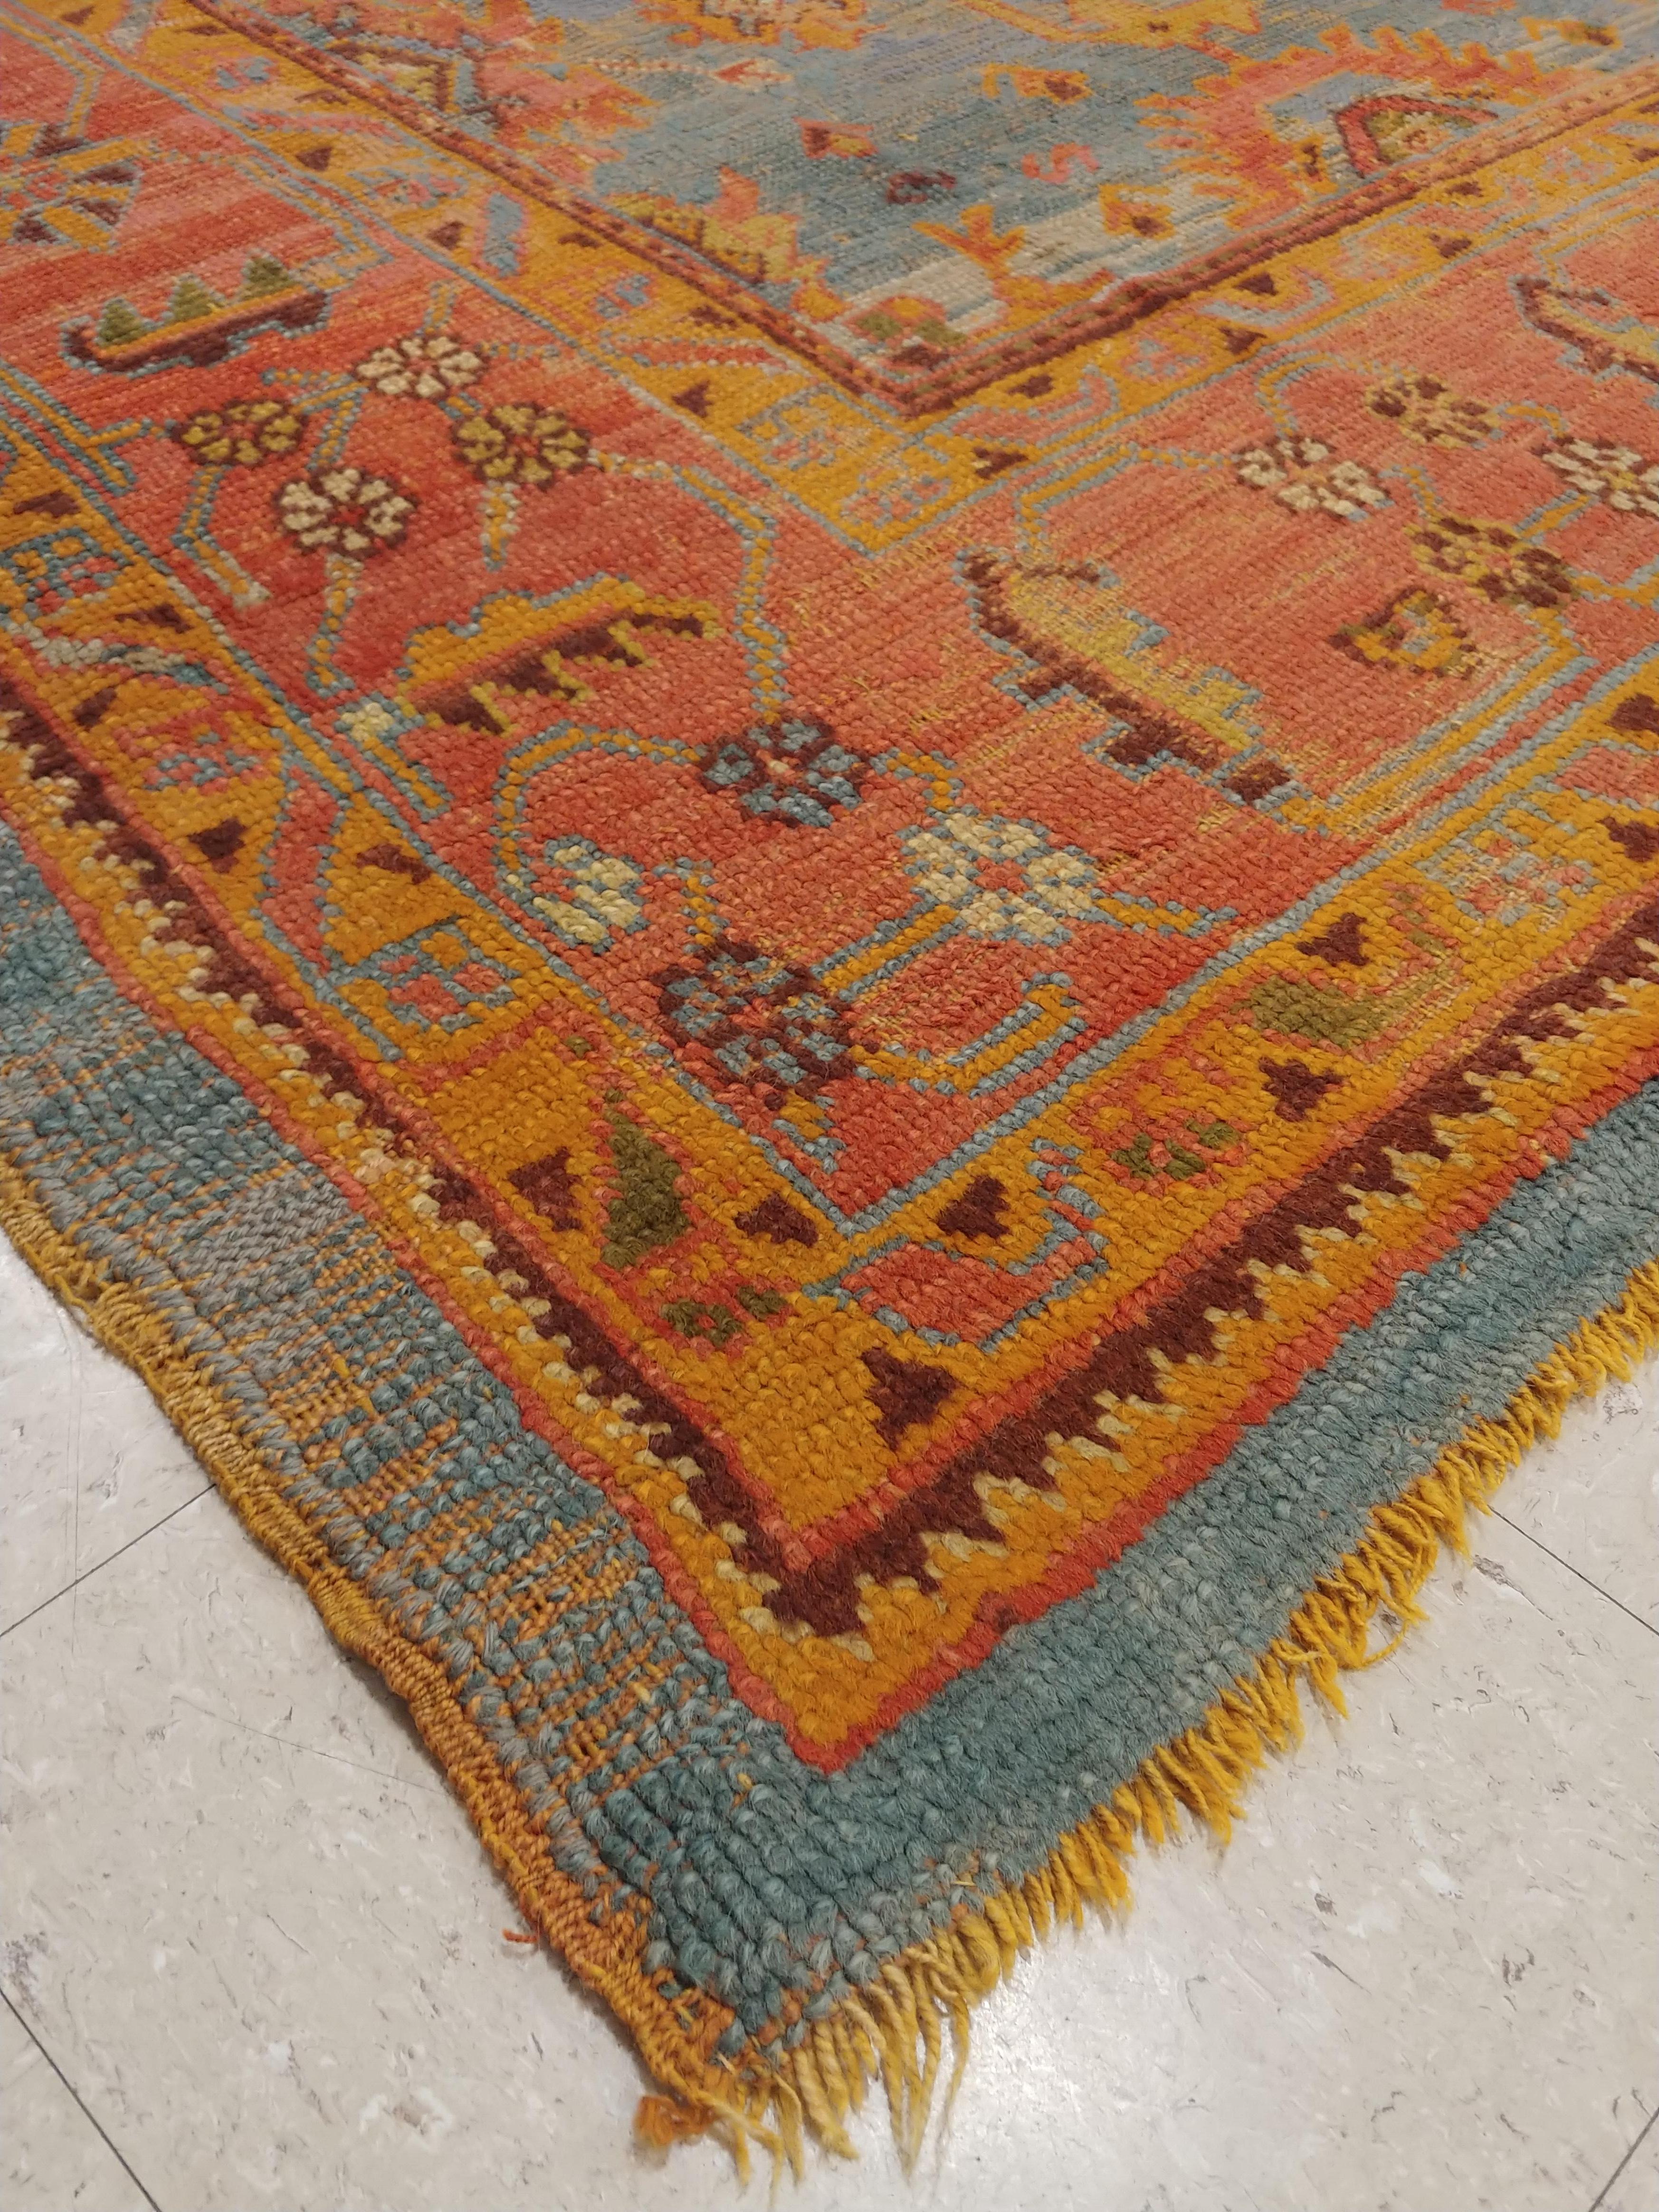 Wool Antique Oushak Carpet, Handmade Oriental Rug Made in Turkey, Coral, Light Blue